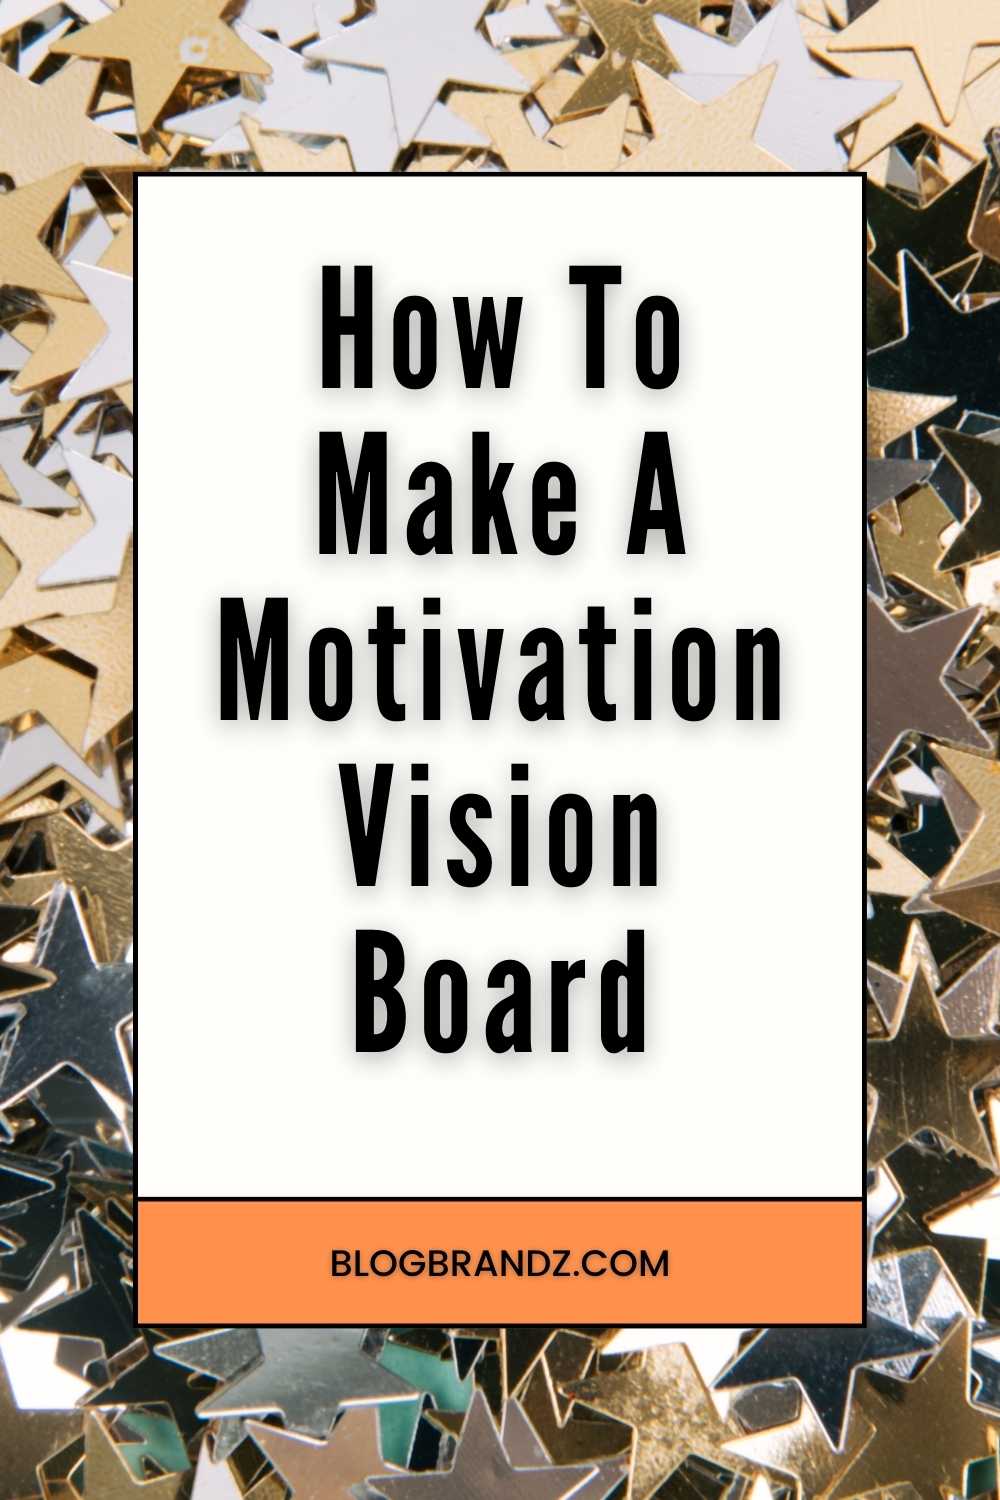 Motivation Vision Board